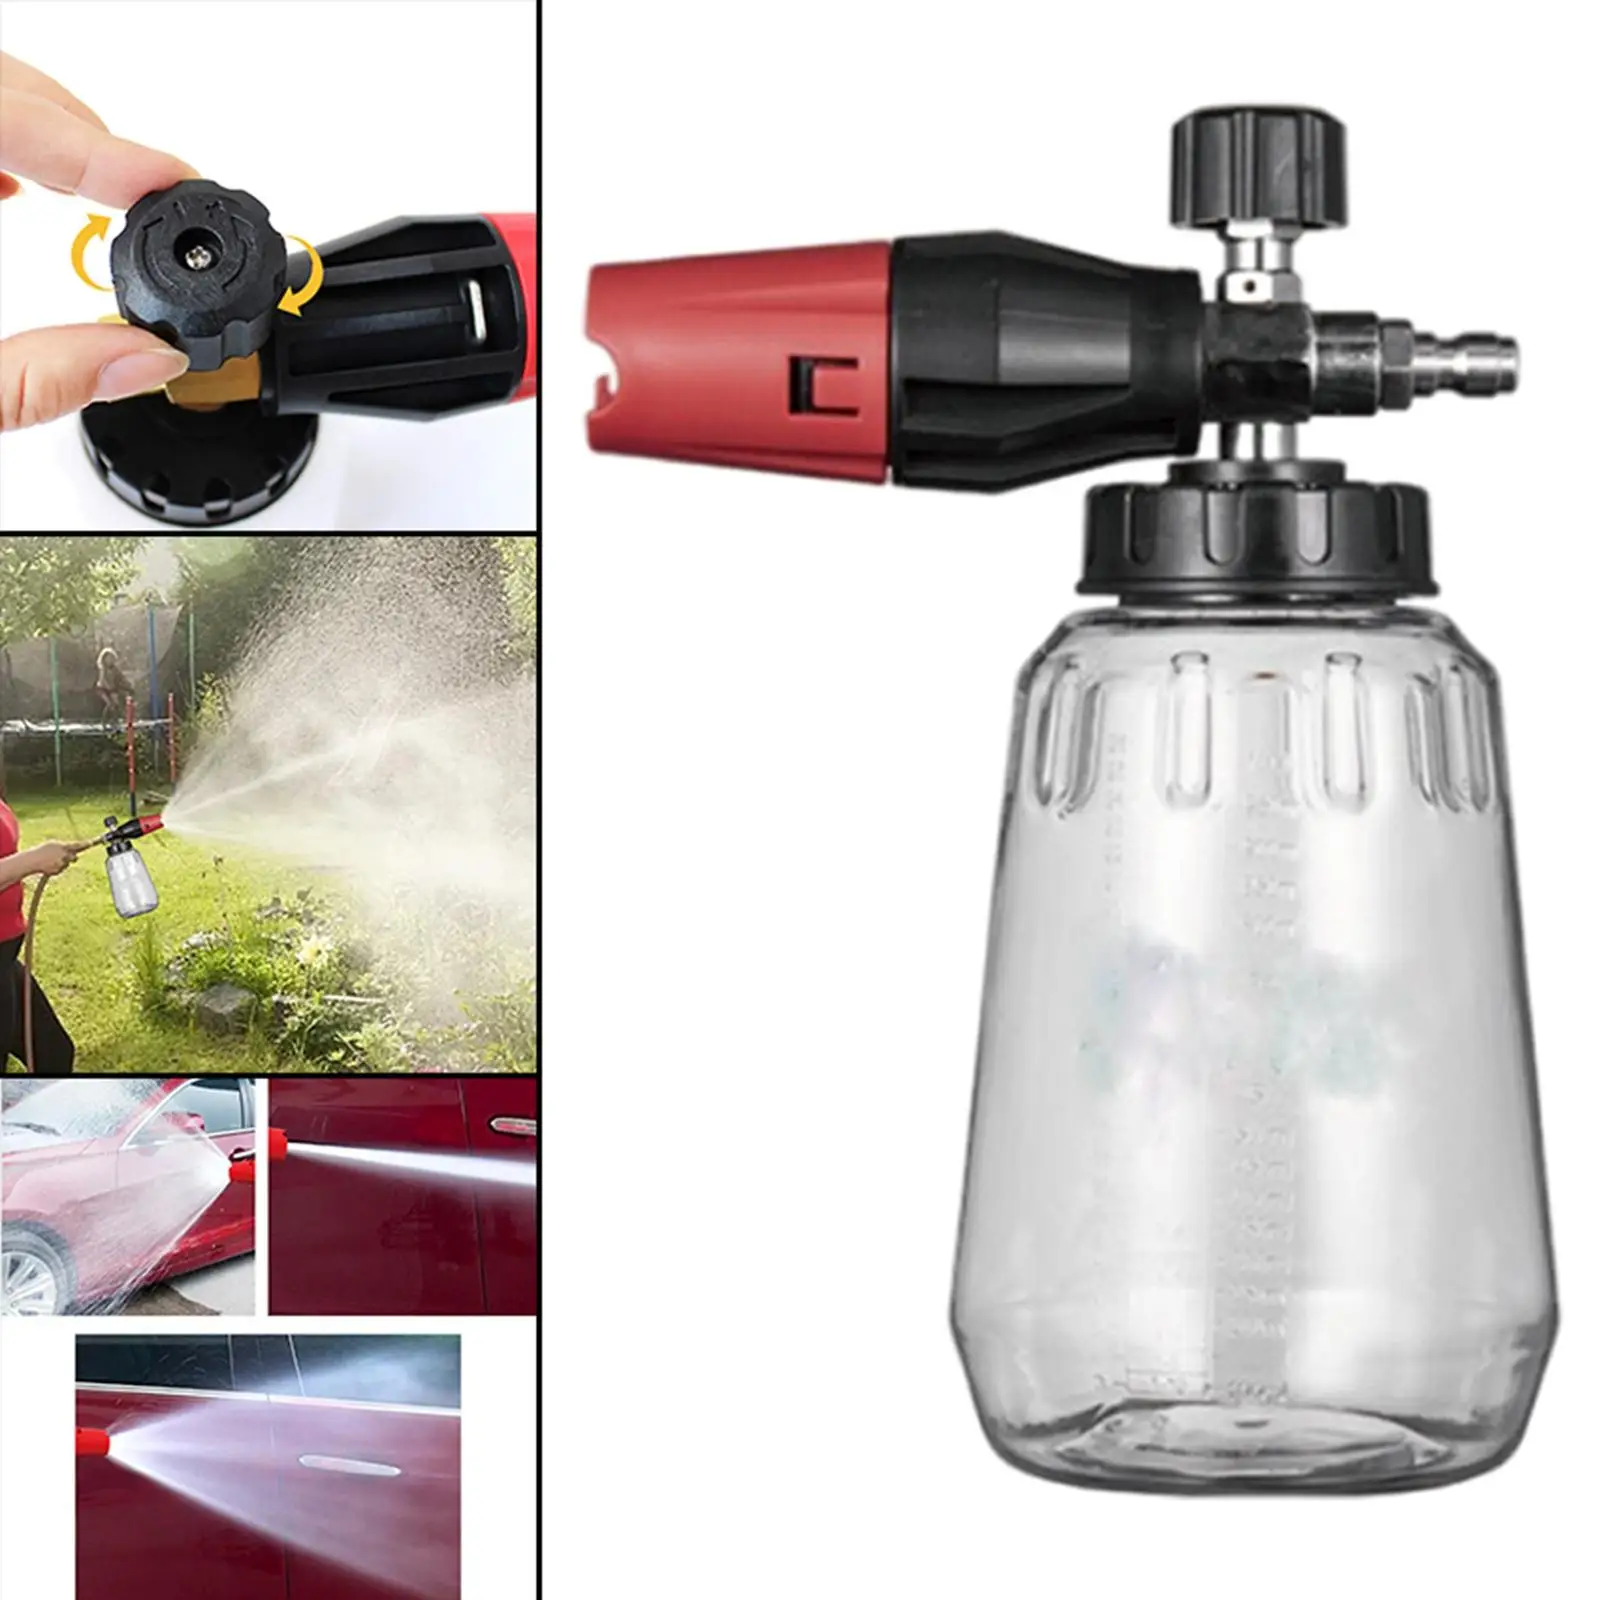 Snow Foam Lance Washer Bottle Soap Lance Spray Jet 1L for Car Window Washing